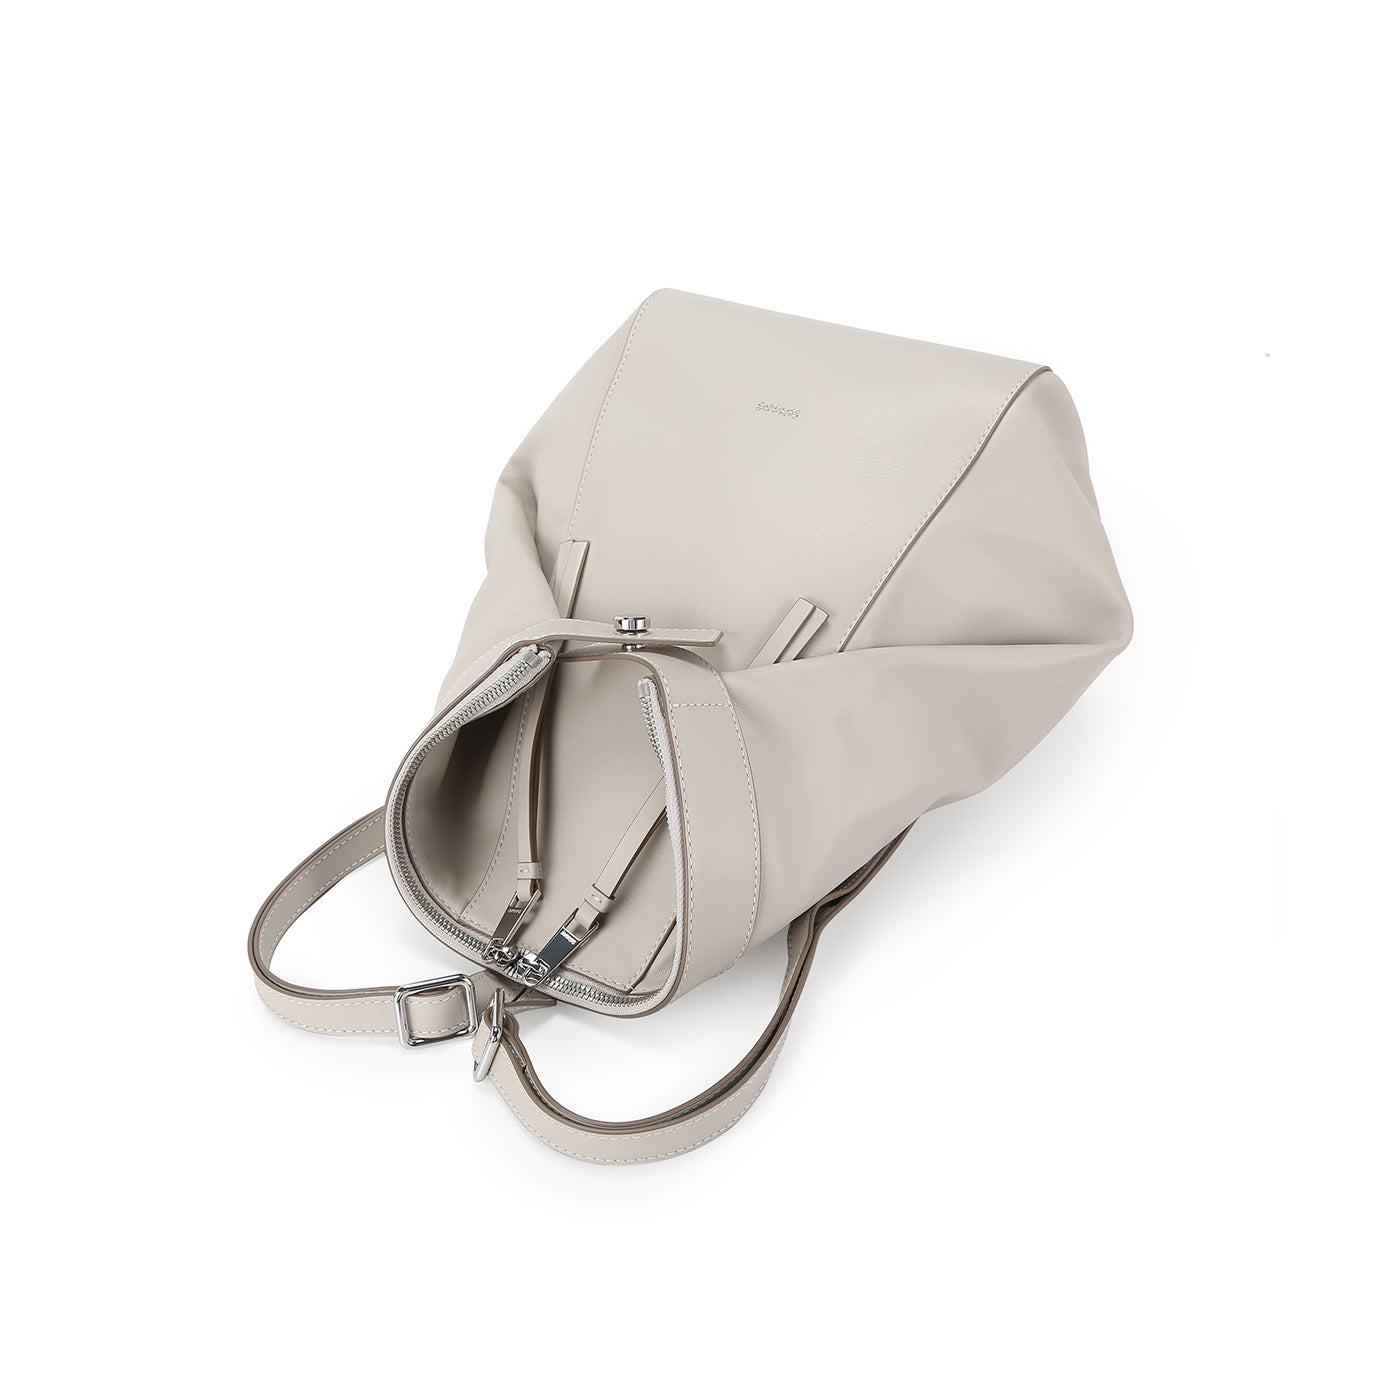 ALEXANDRIA Contractible Origami Backpack